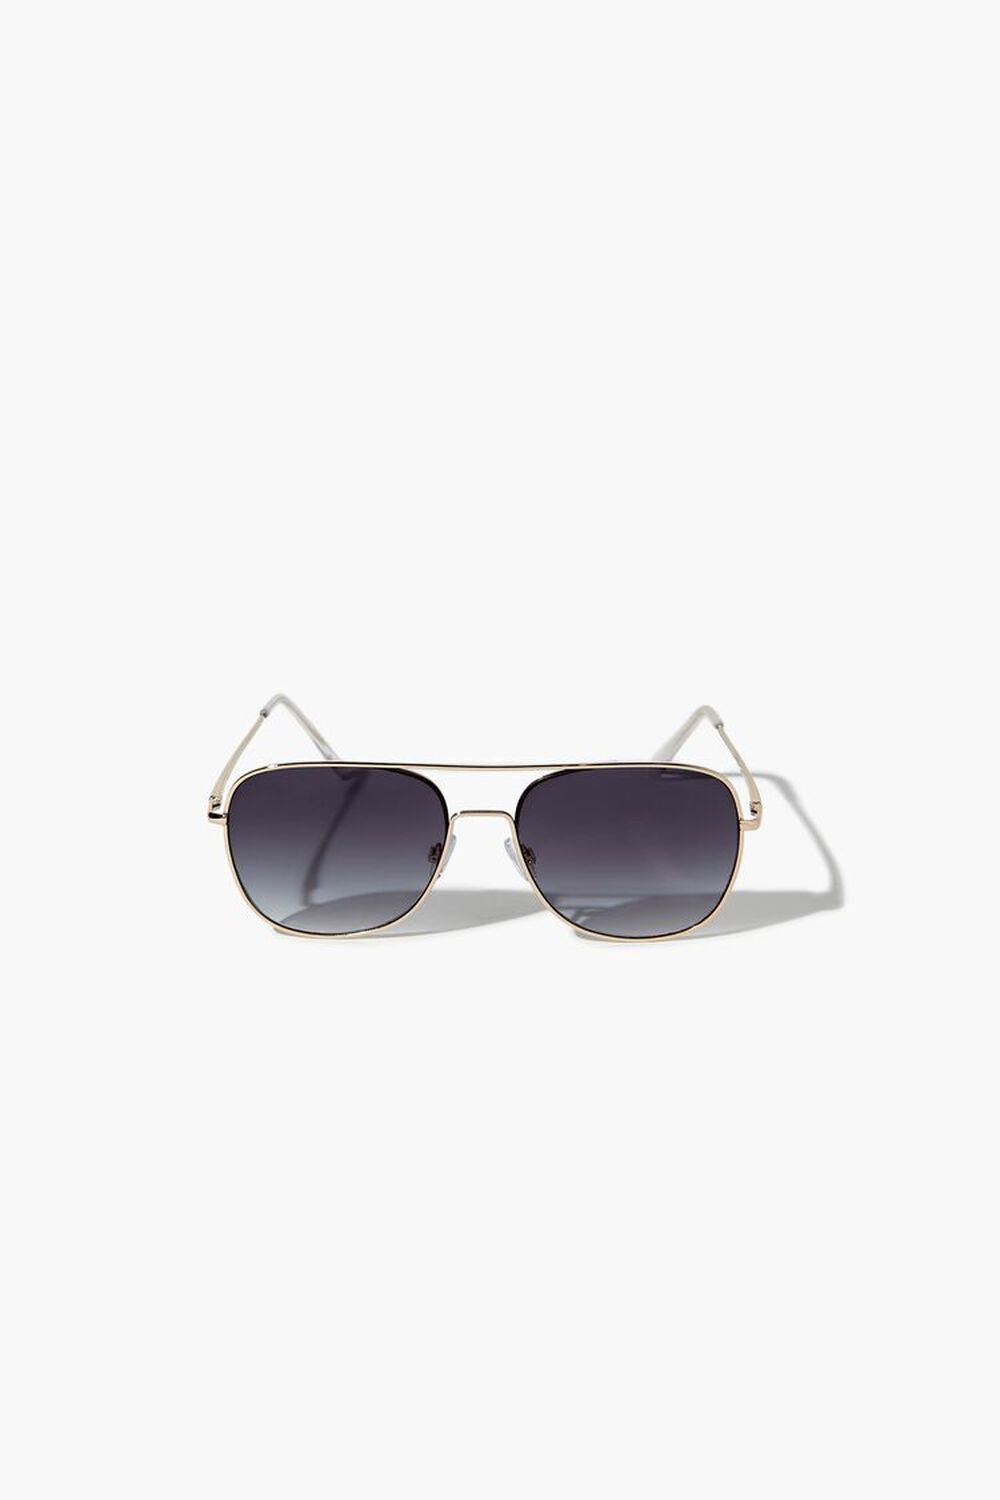 Tinted Aviator Sunglasses, image 1